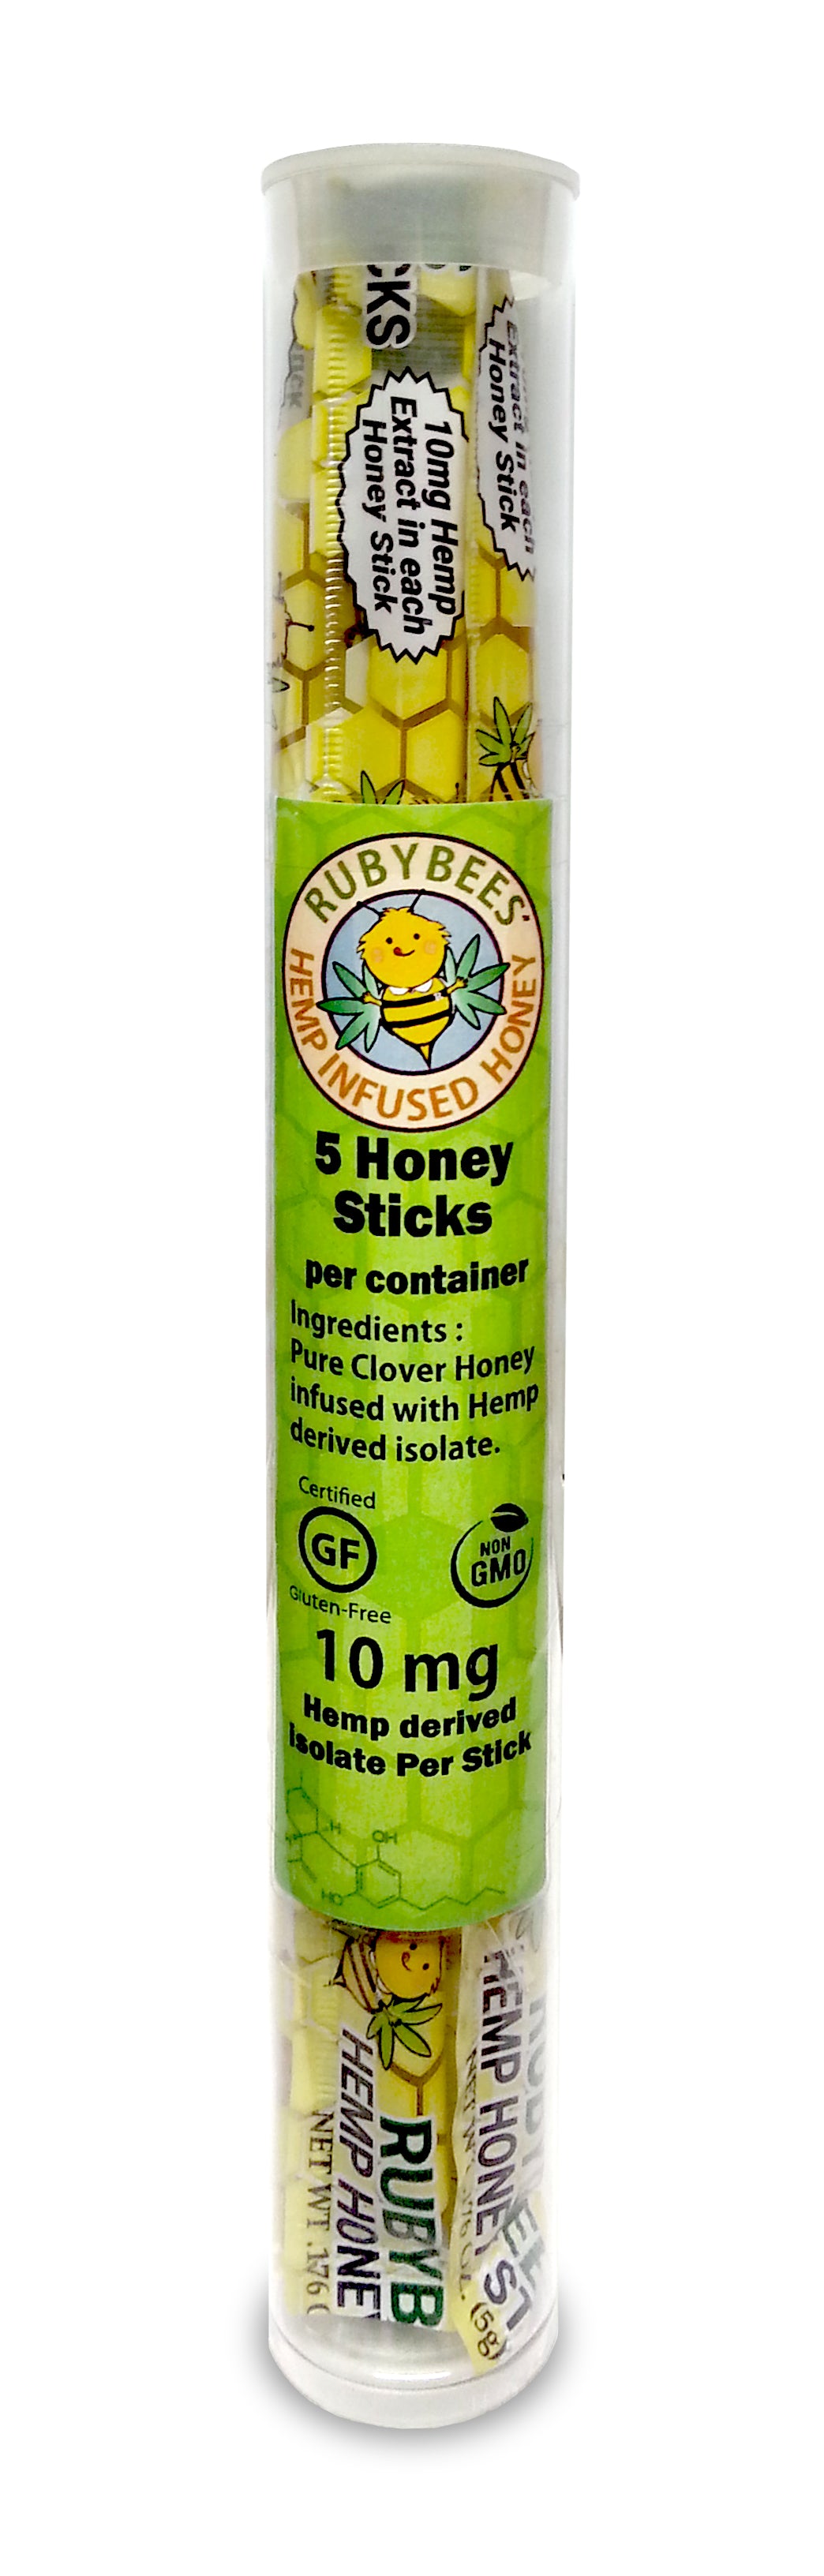 RubyBees Hemp-Infused Honey Sticks